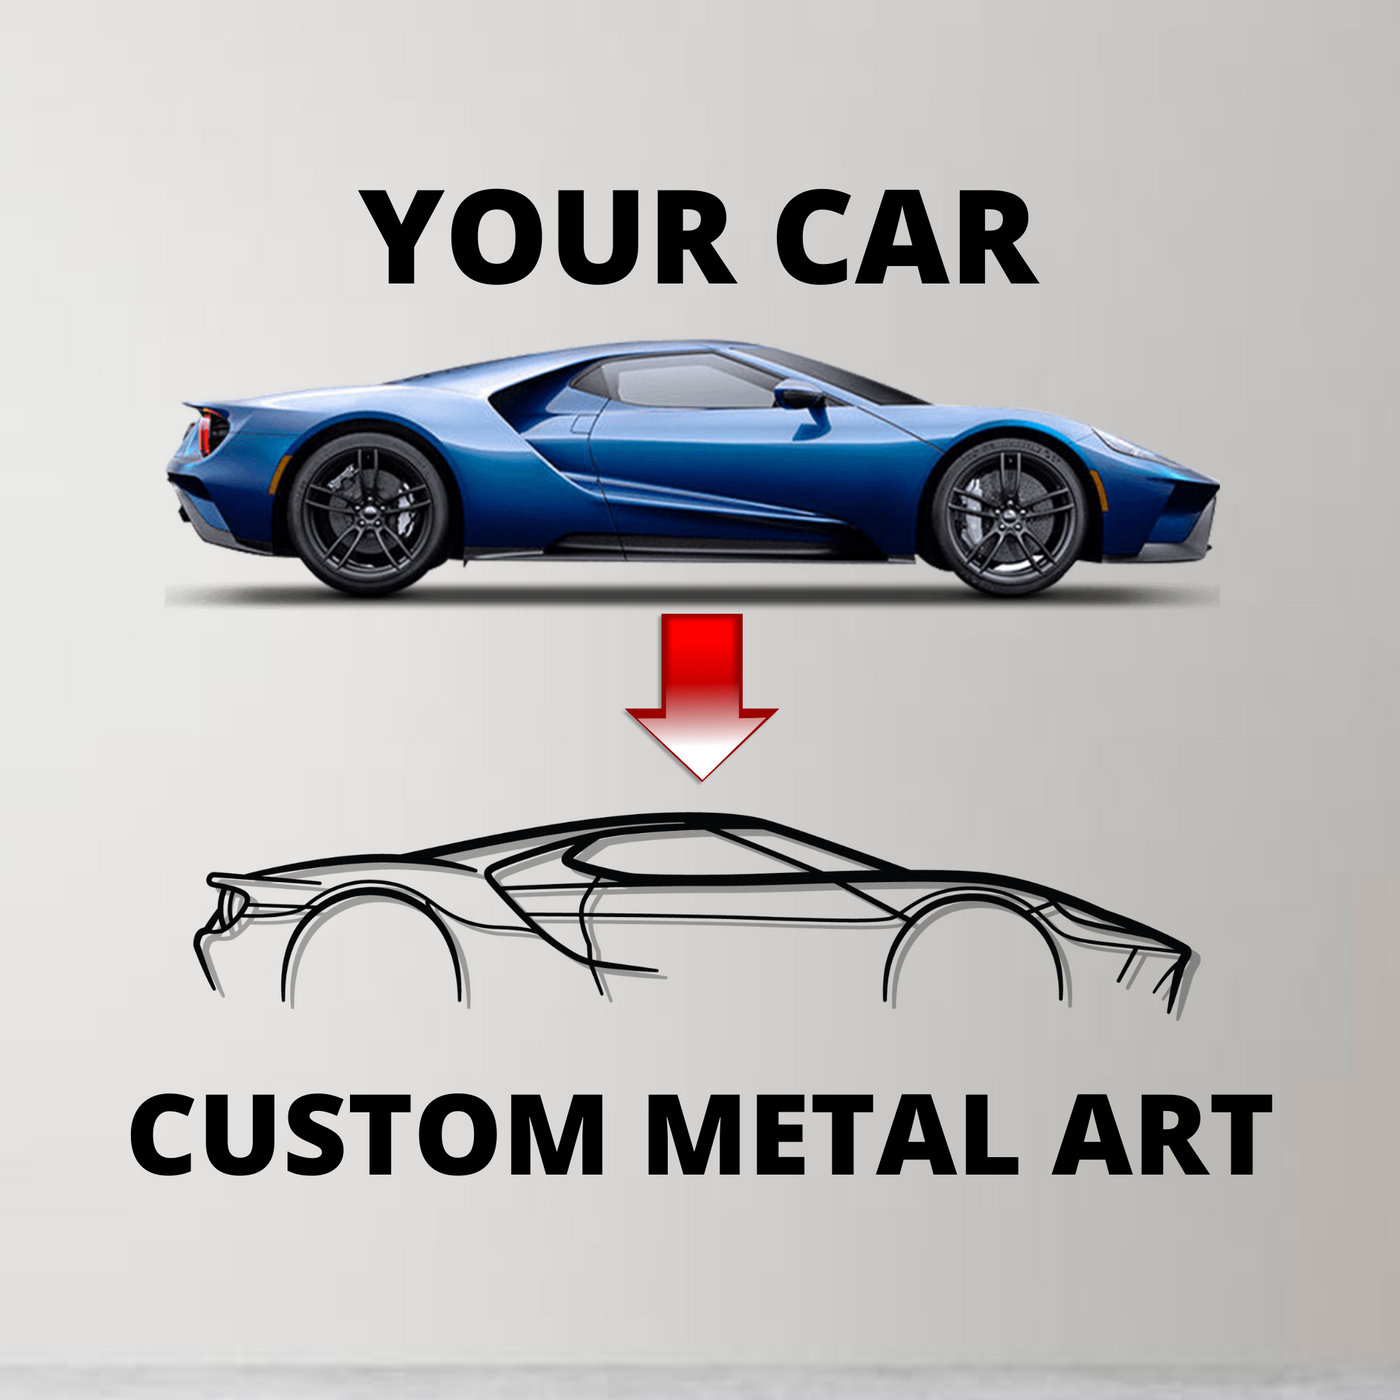 370Z Detailed Silhouette Metal Wall Art